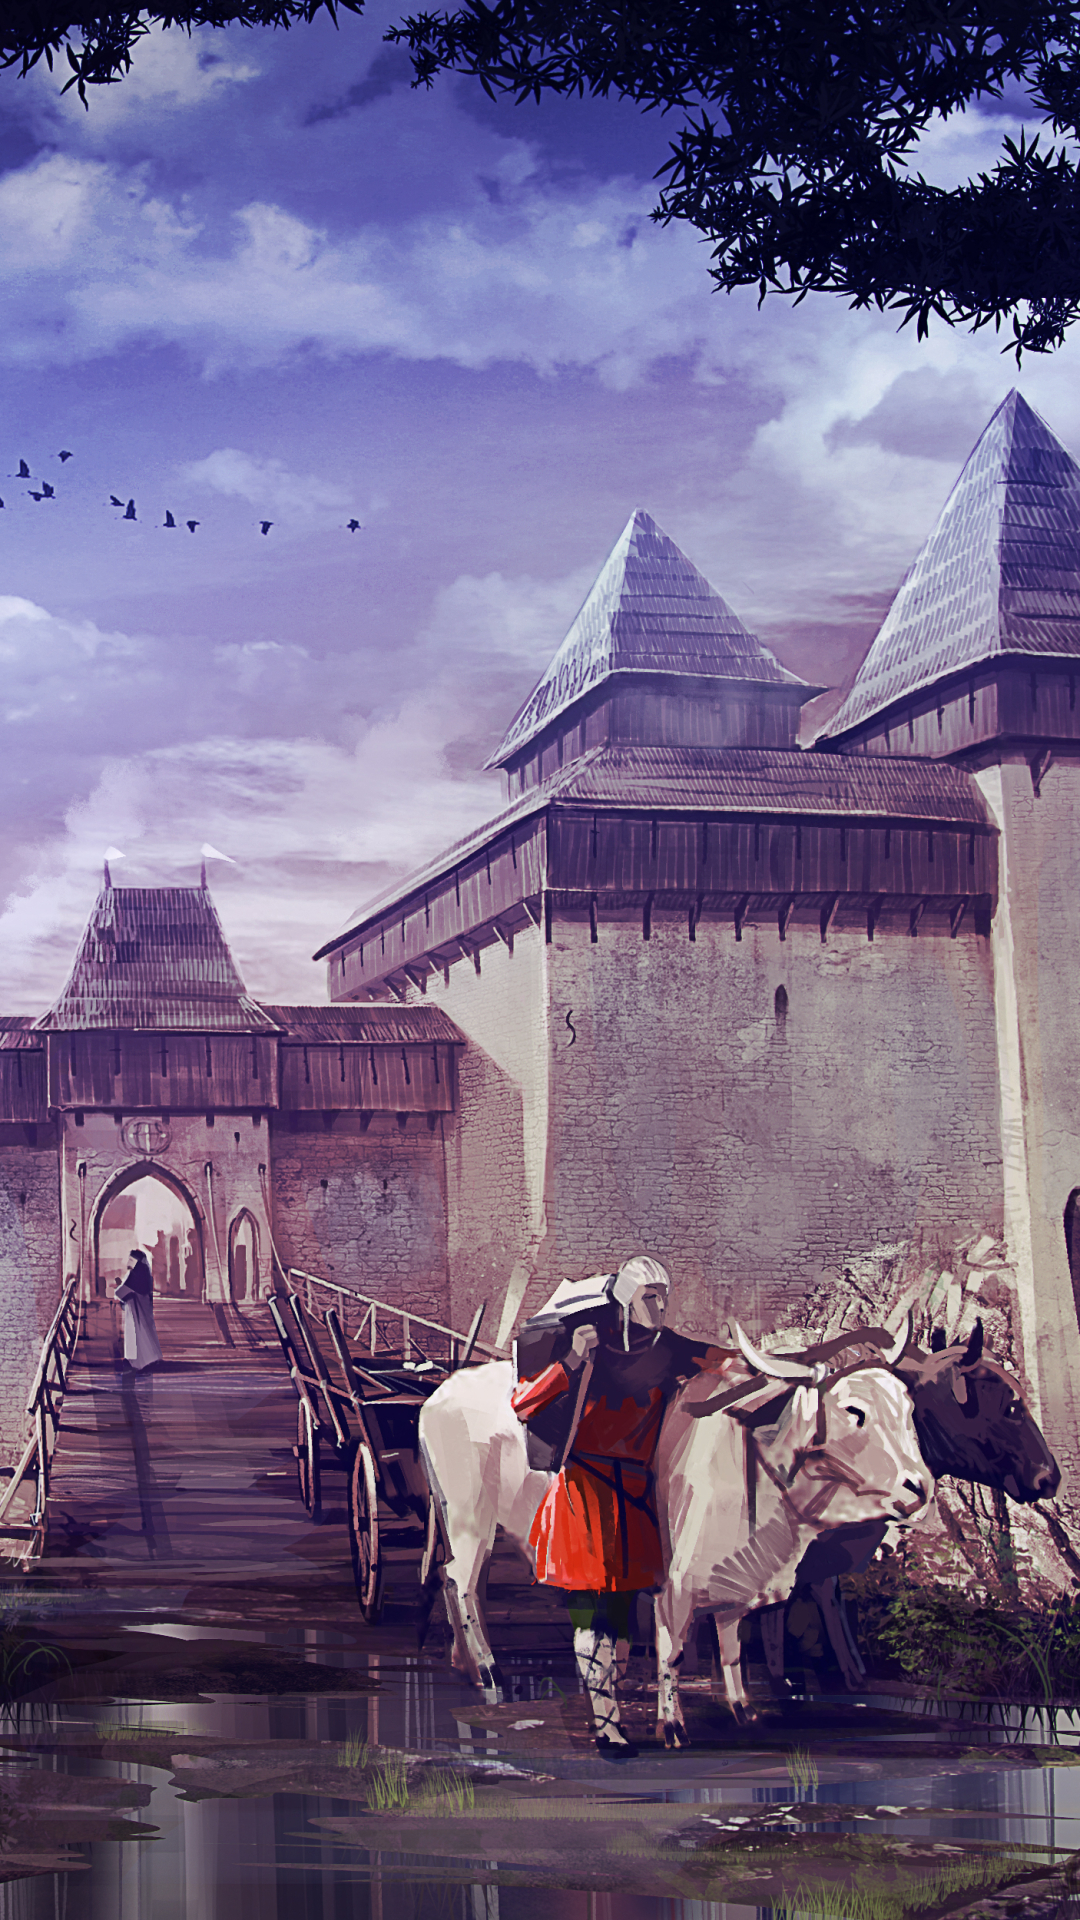 Download mobile wallpaper Video Game, Kingdom Come: Deliverance for free.